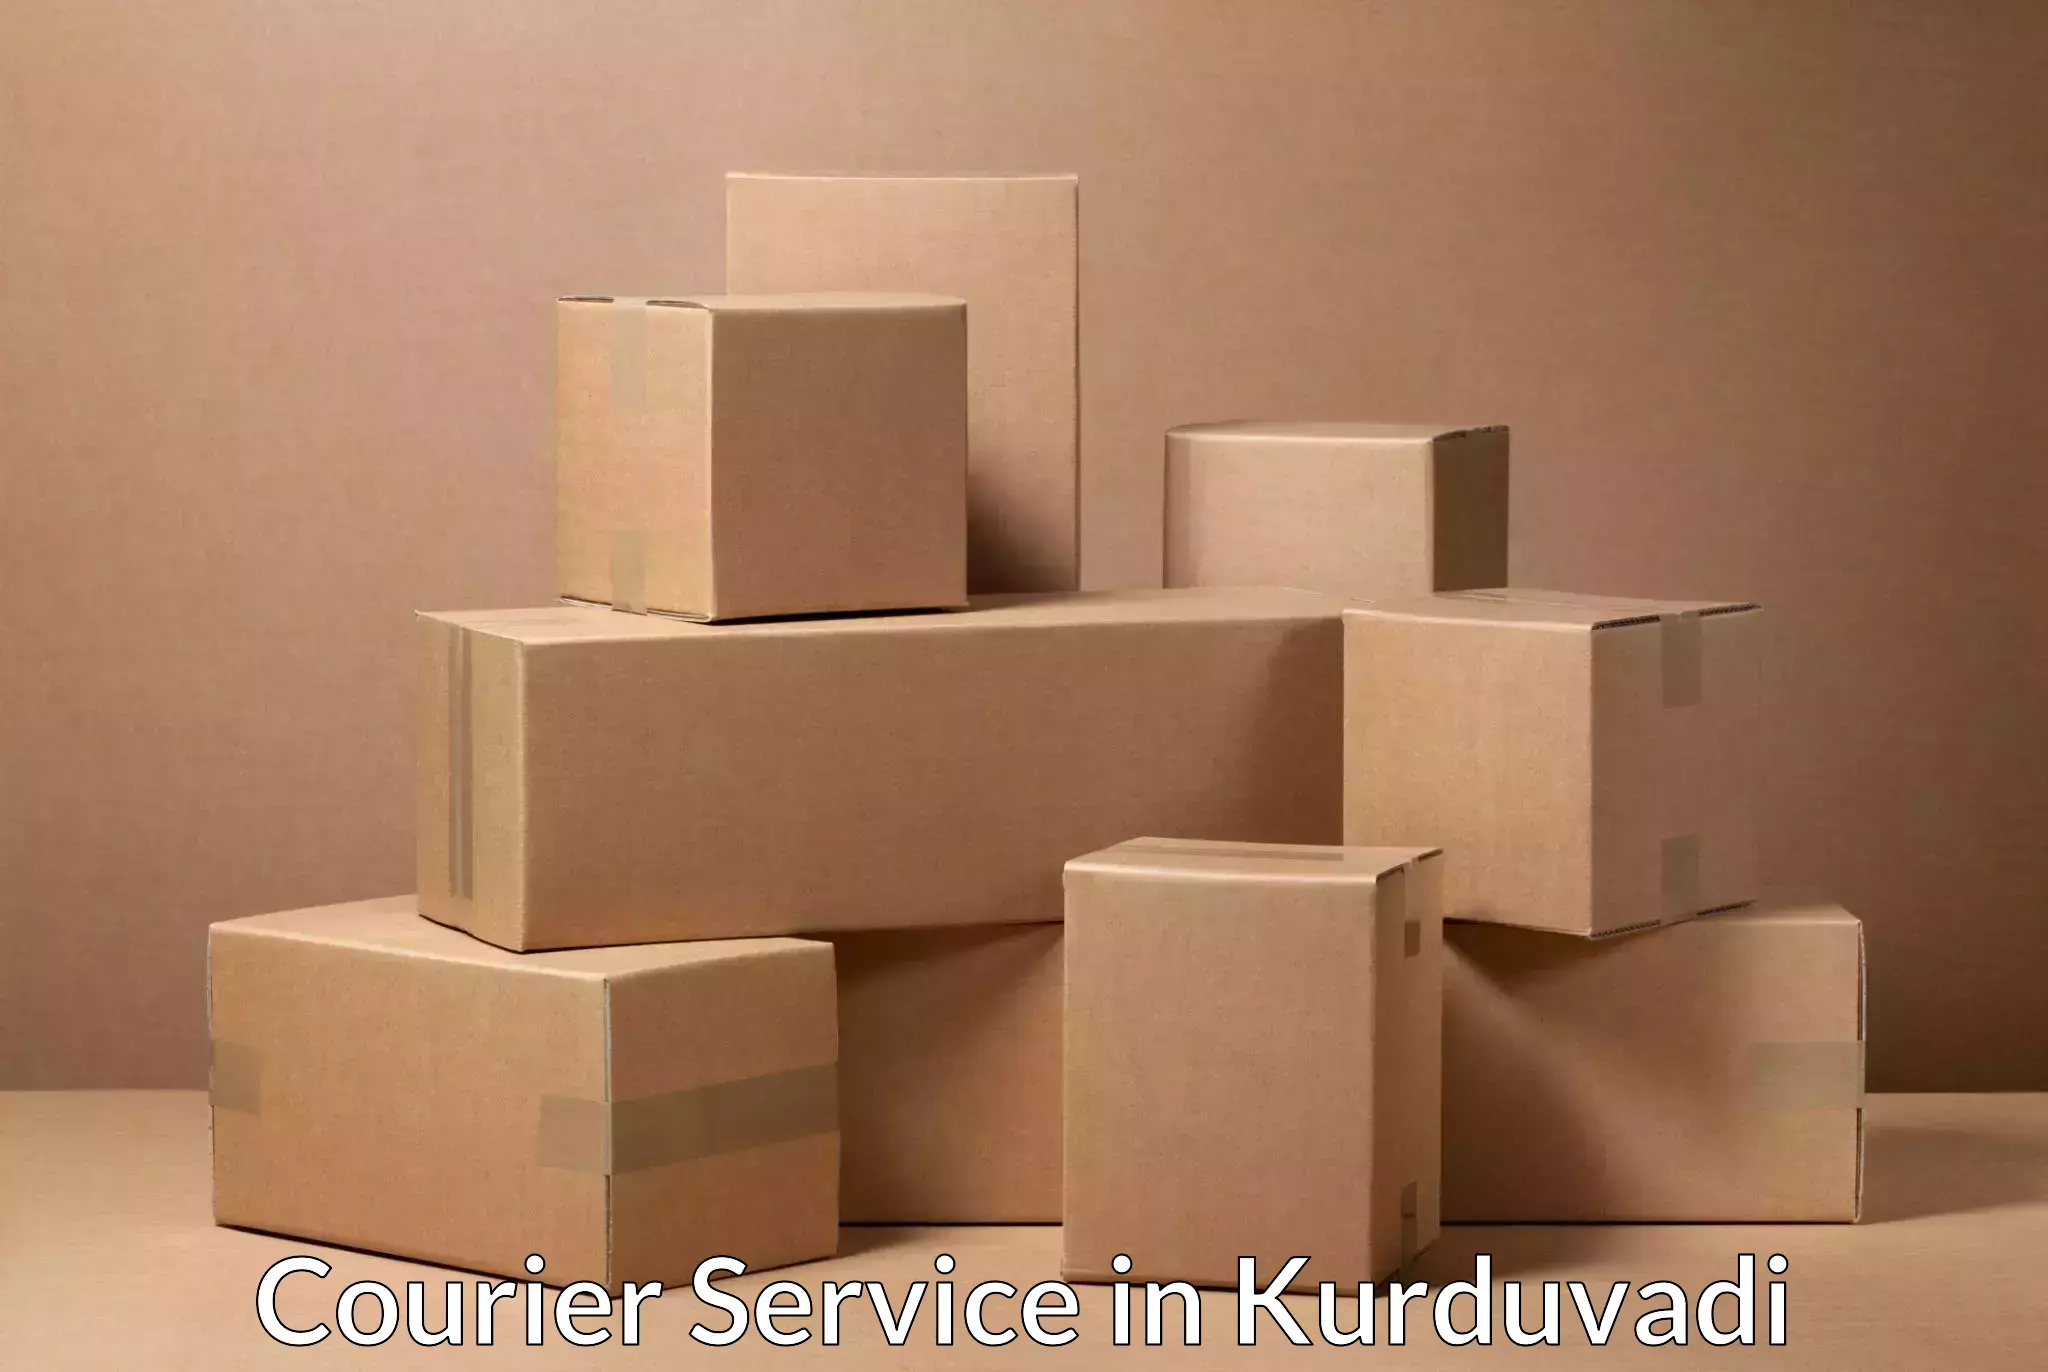 Seamless shipping experience in Kurduvadi